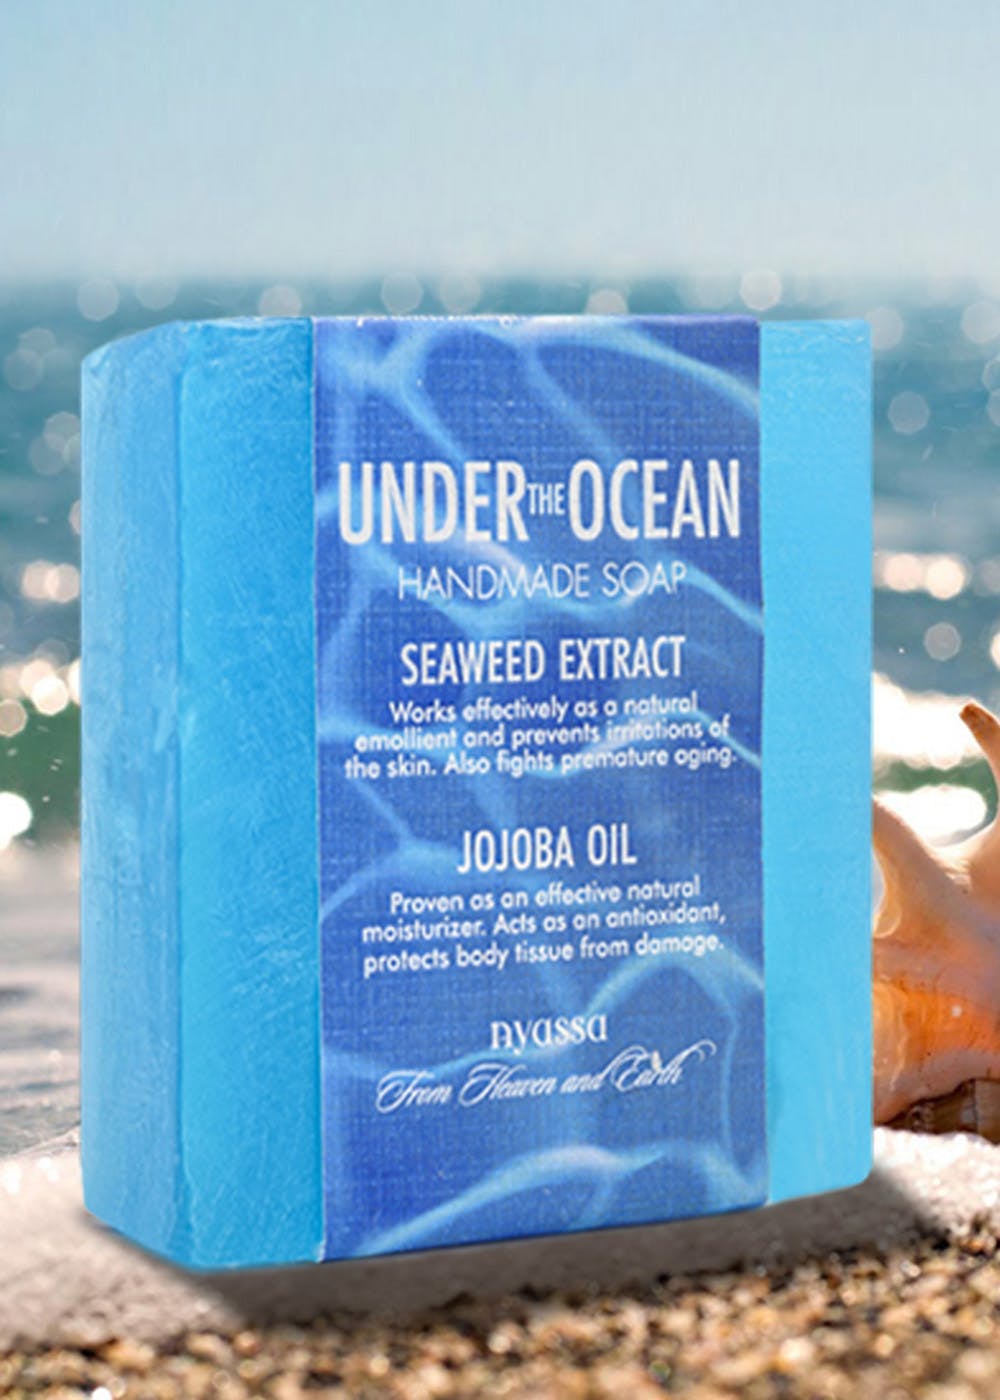 Under The Ocean Handmade Soap